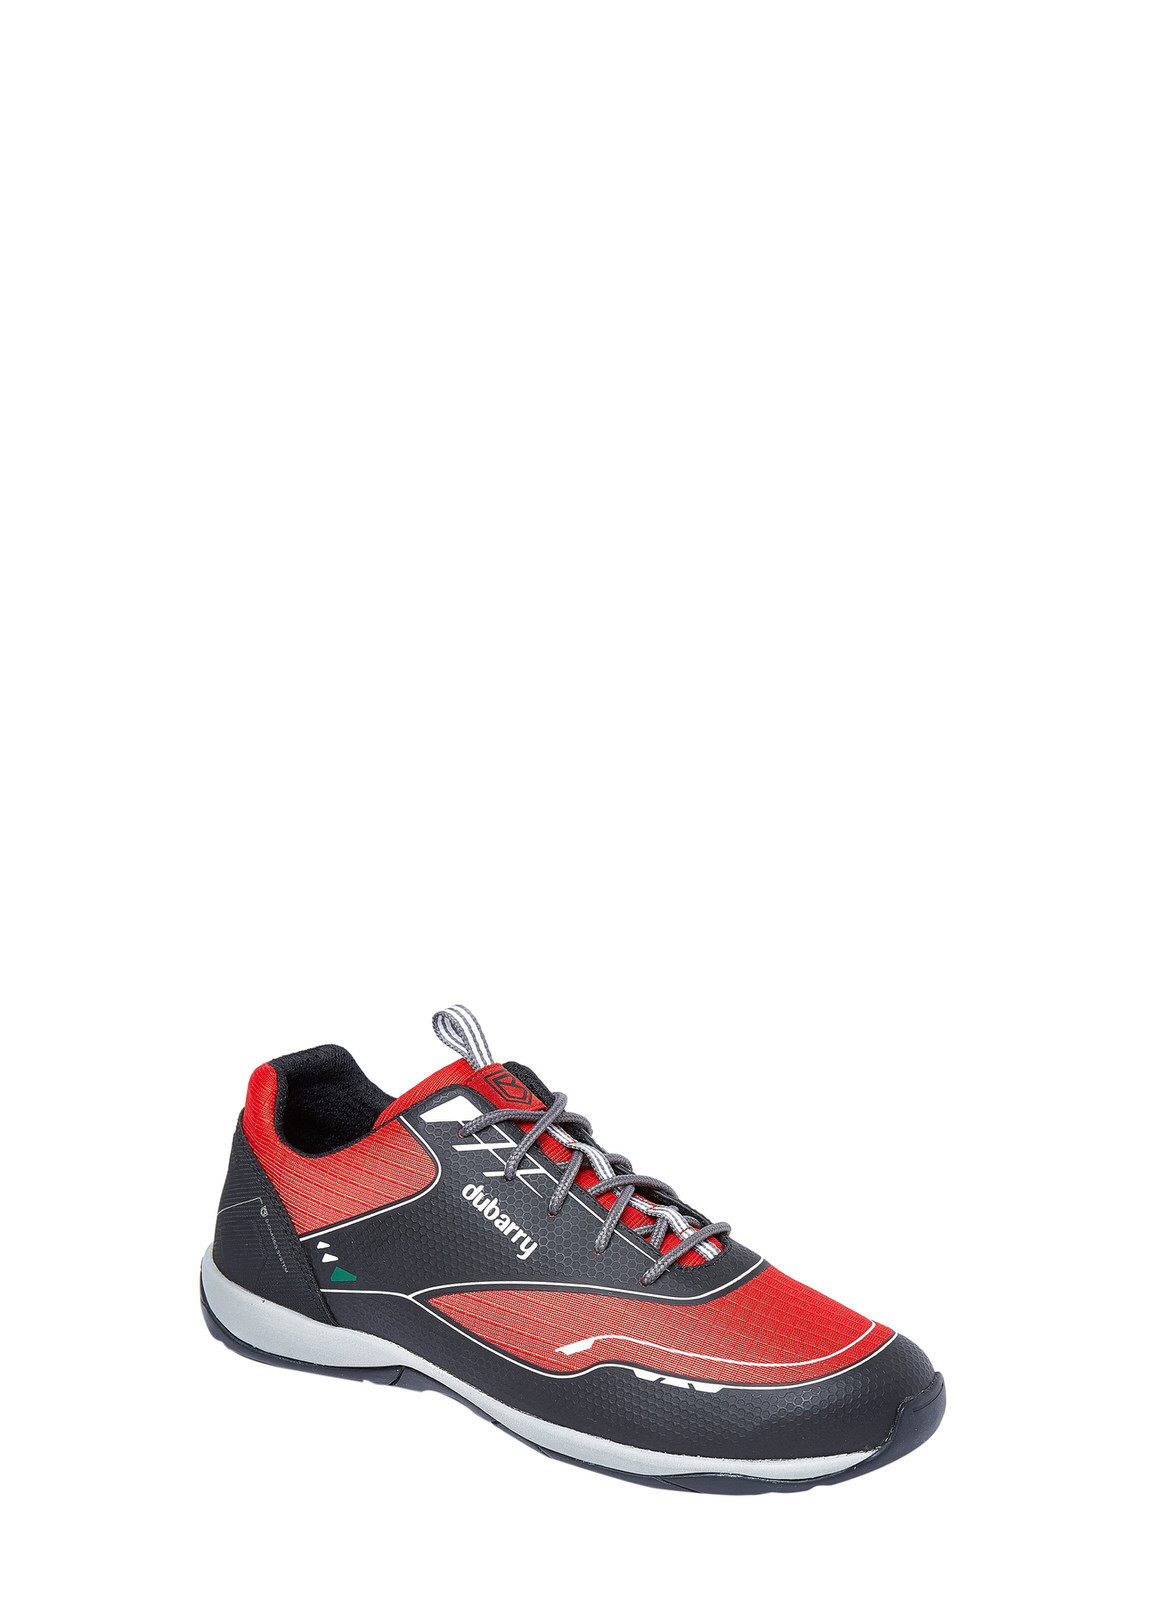 Racer Aquasport Shoe - Red